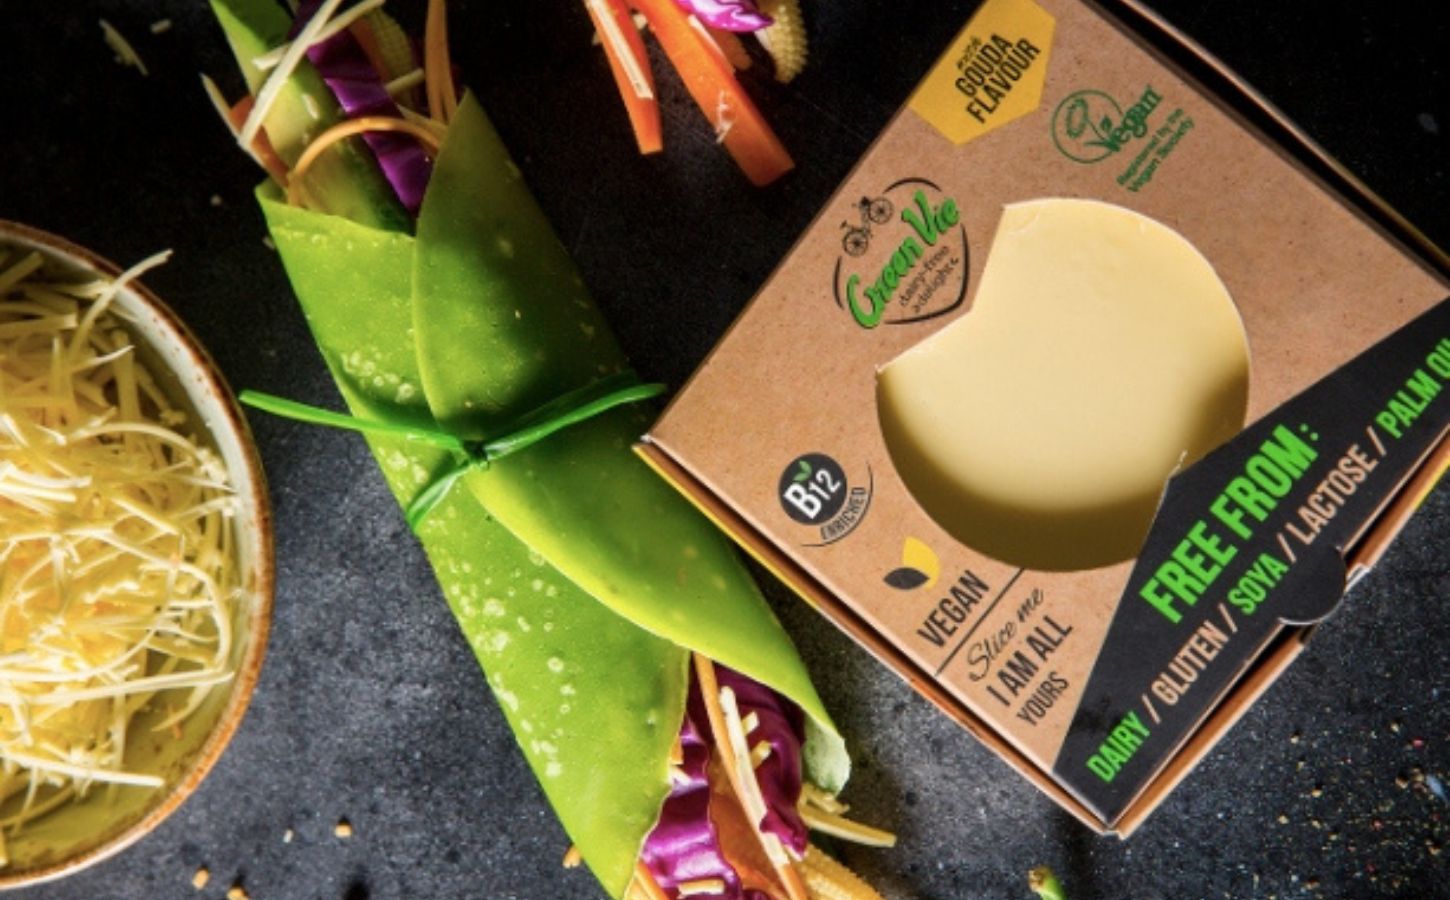 Vegan cheese from plant-based brand Green Vie